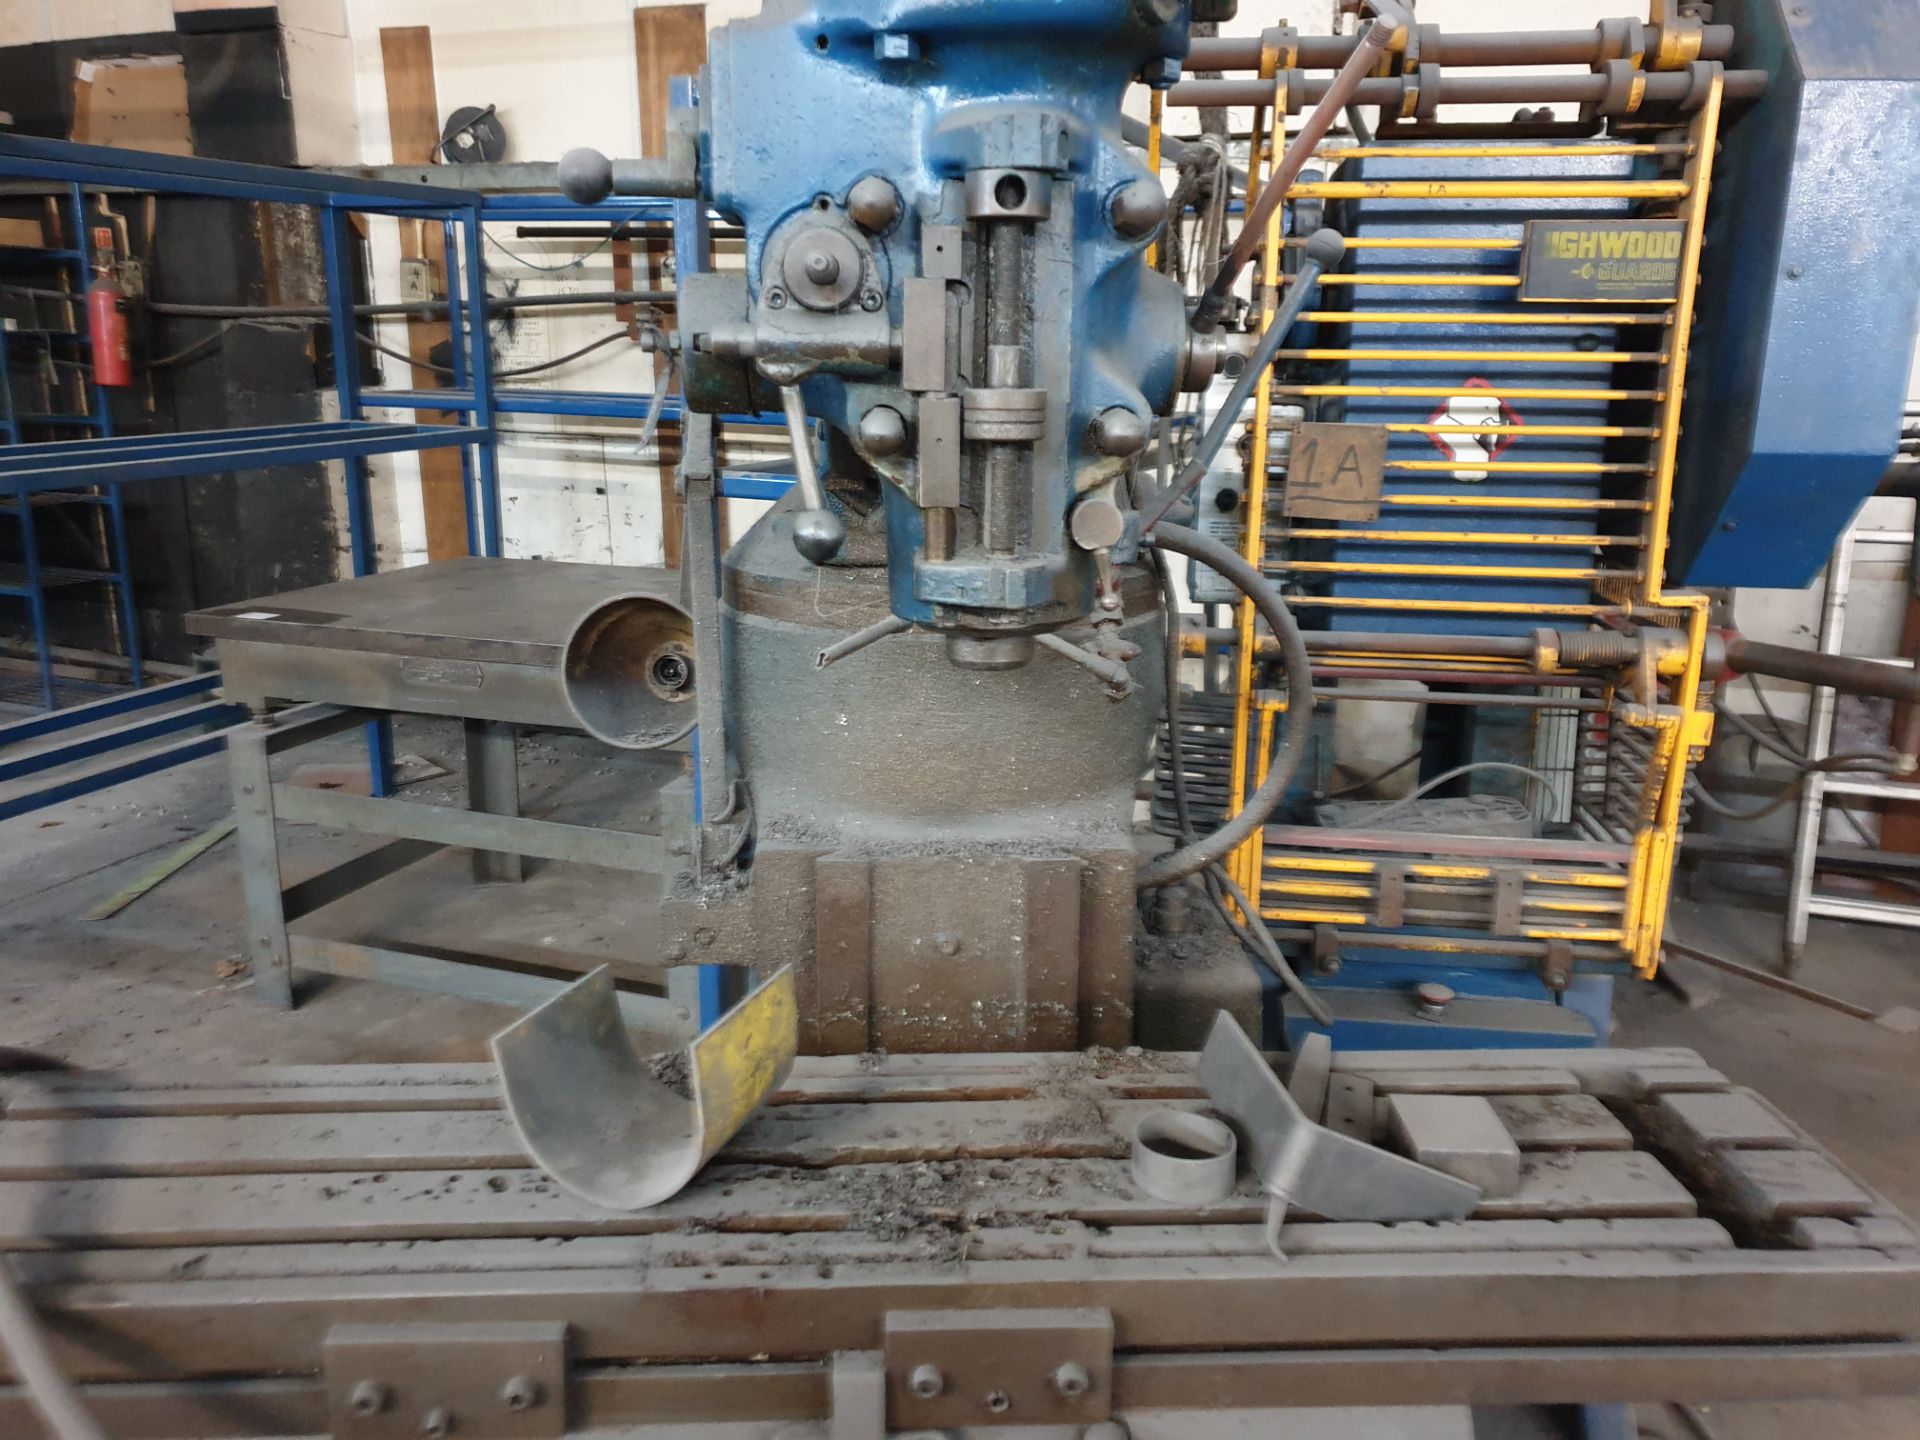 Bridgeport milling machine - Image 4 of 5